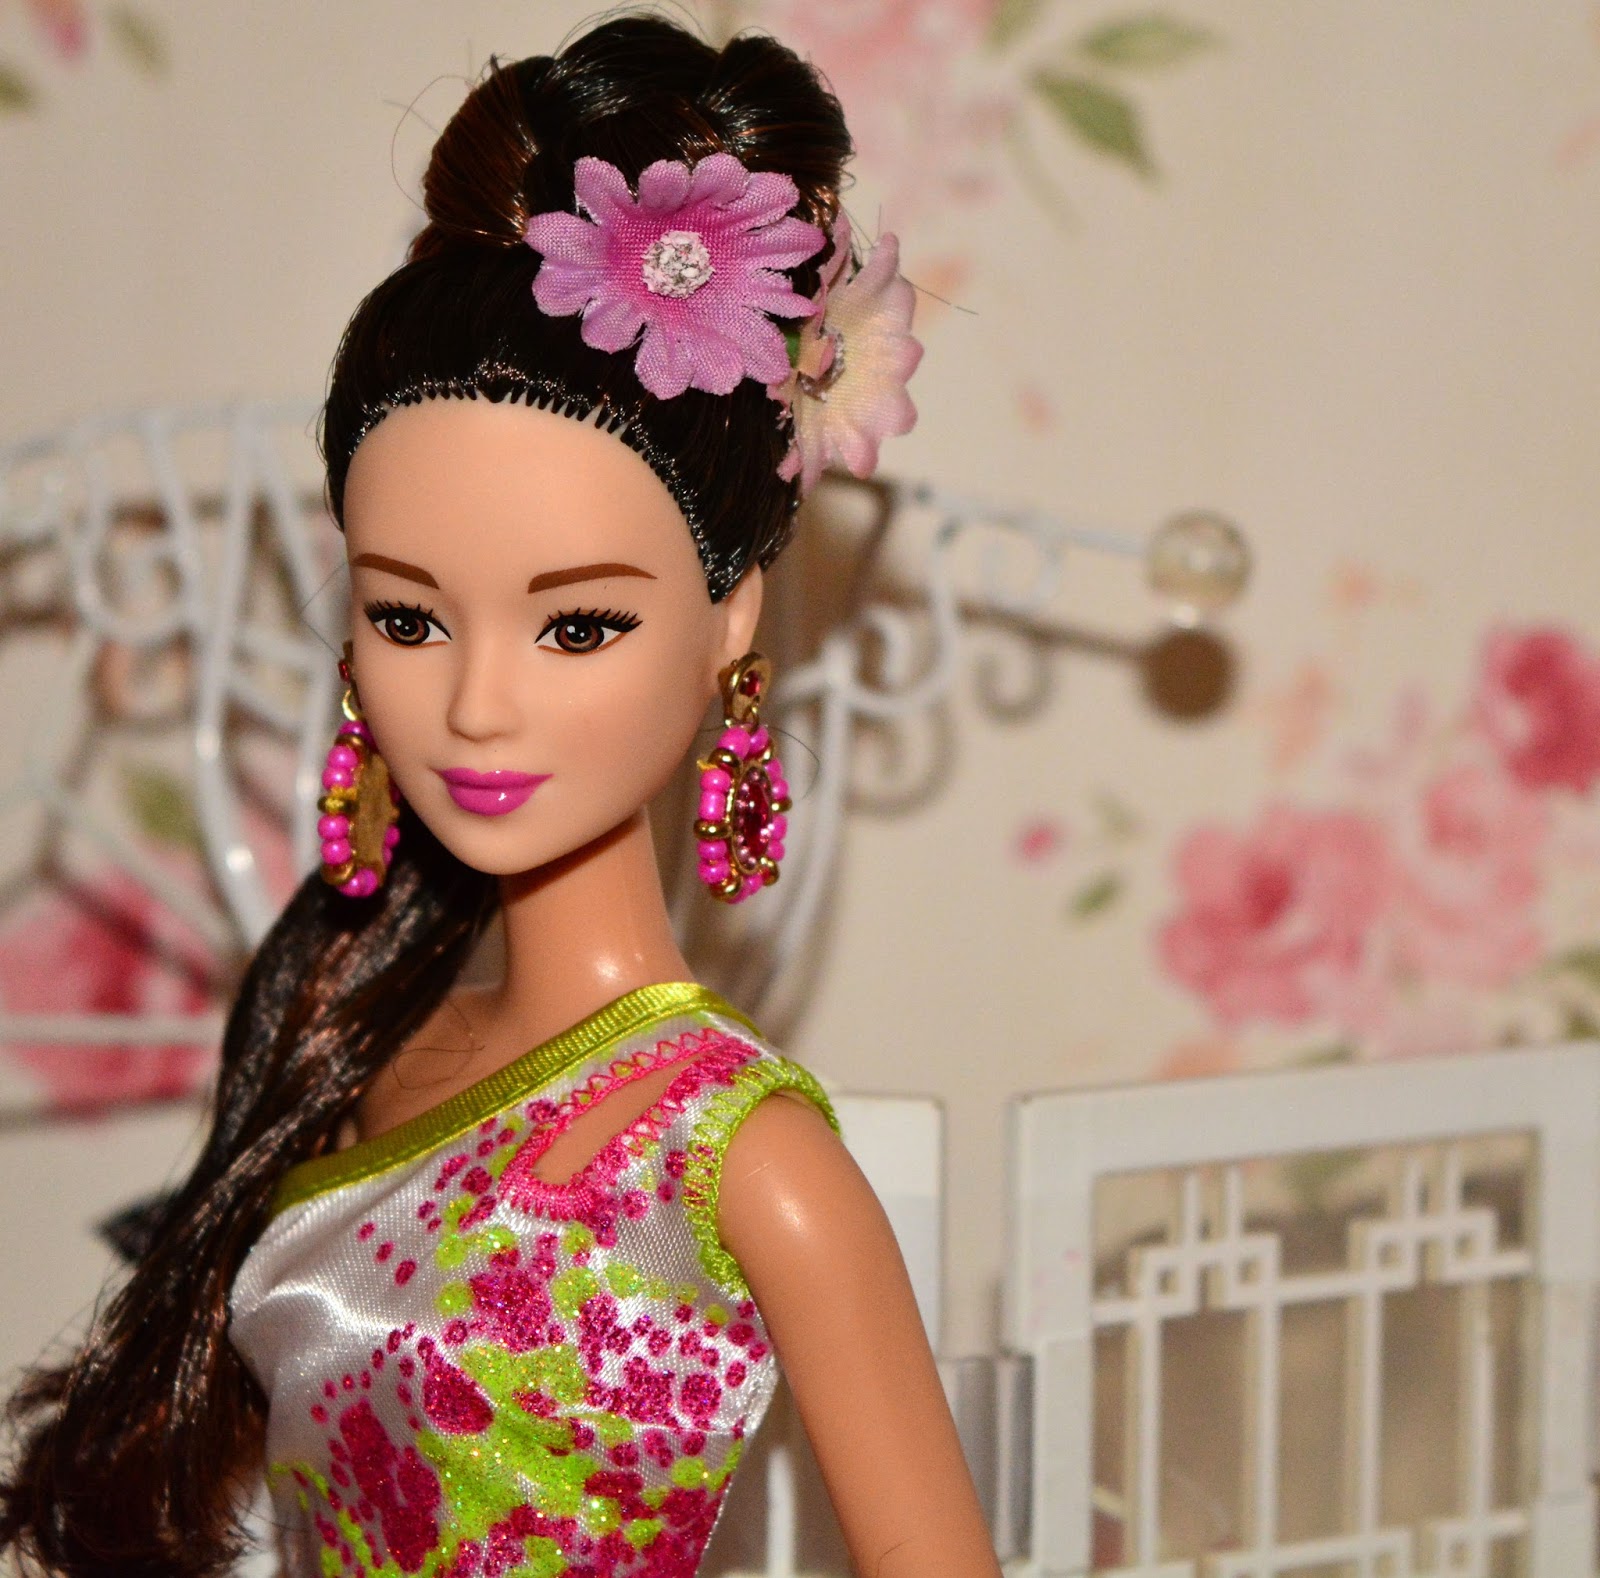 Asian barbie 69